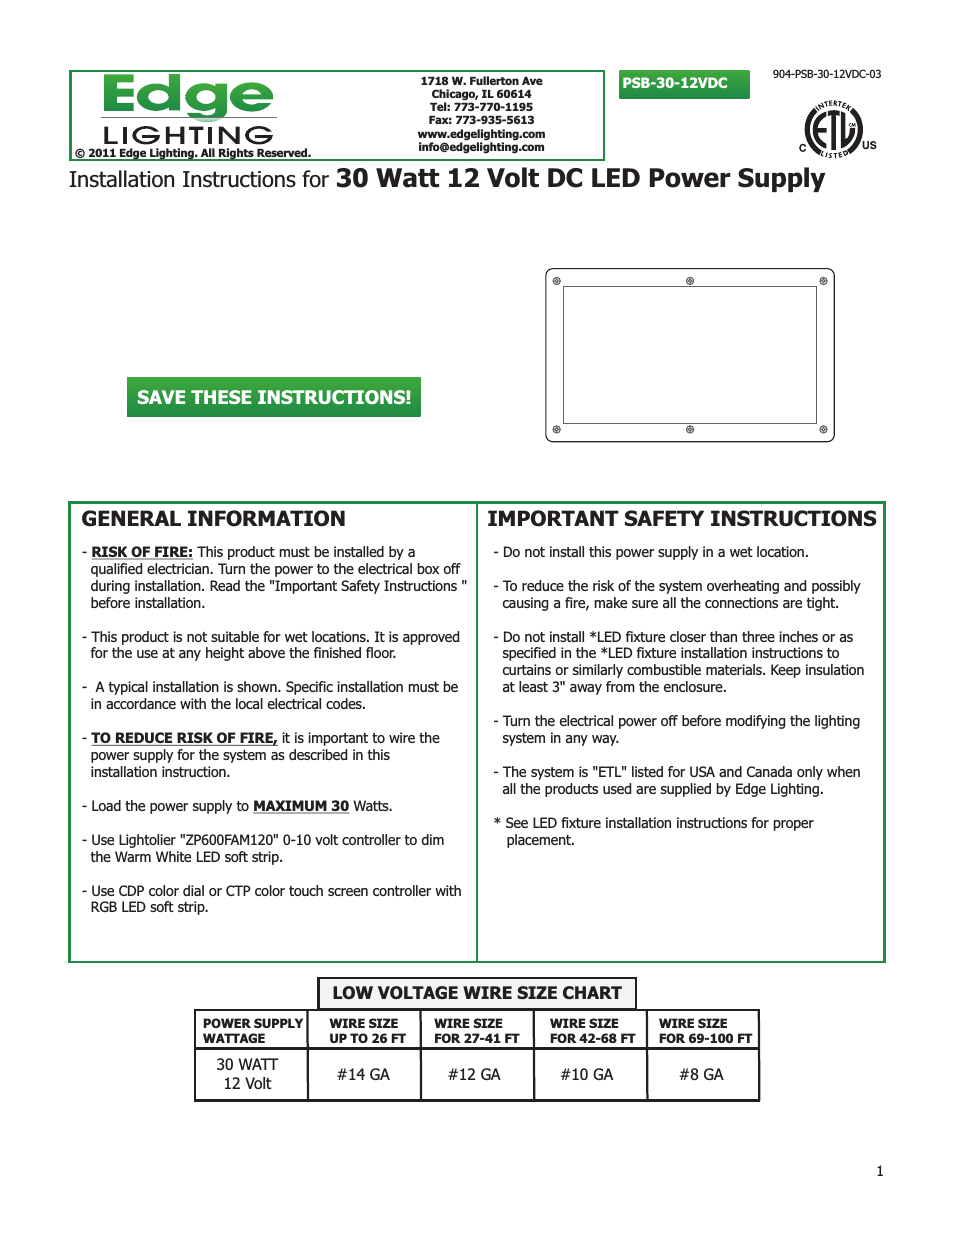 PSB-30W-12VDC, 30 Watt 12 Volt DC Power Supply